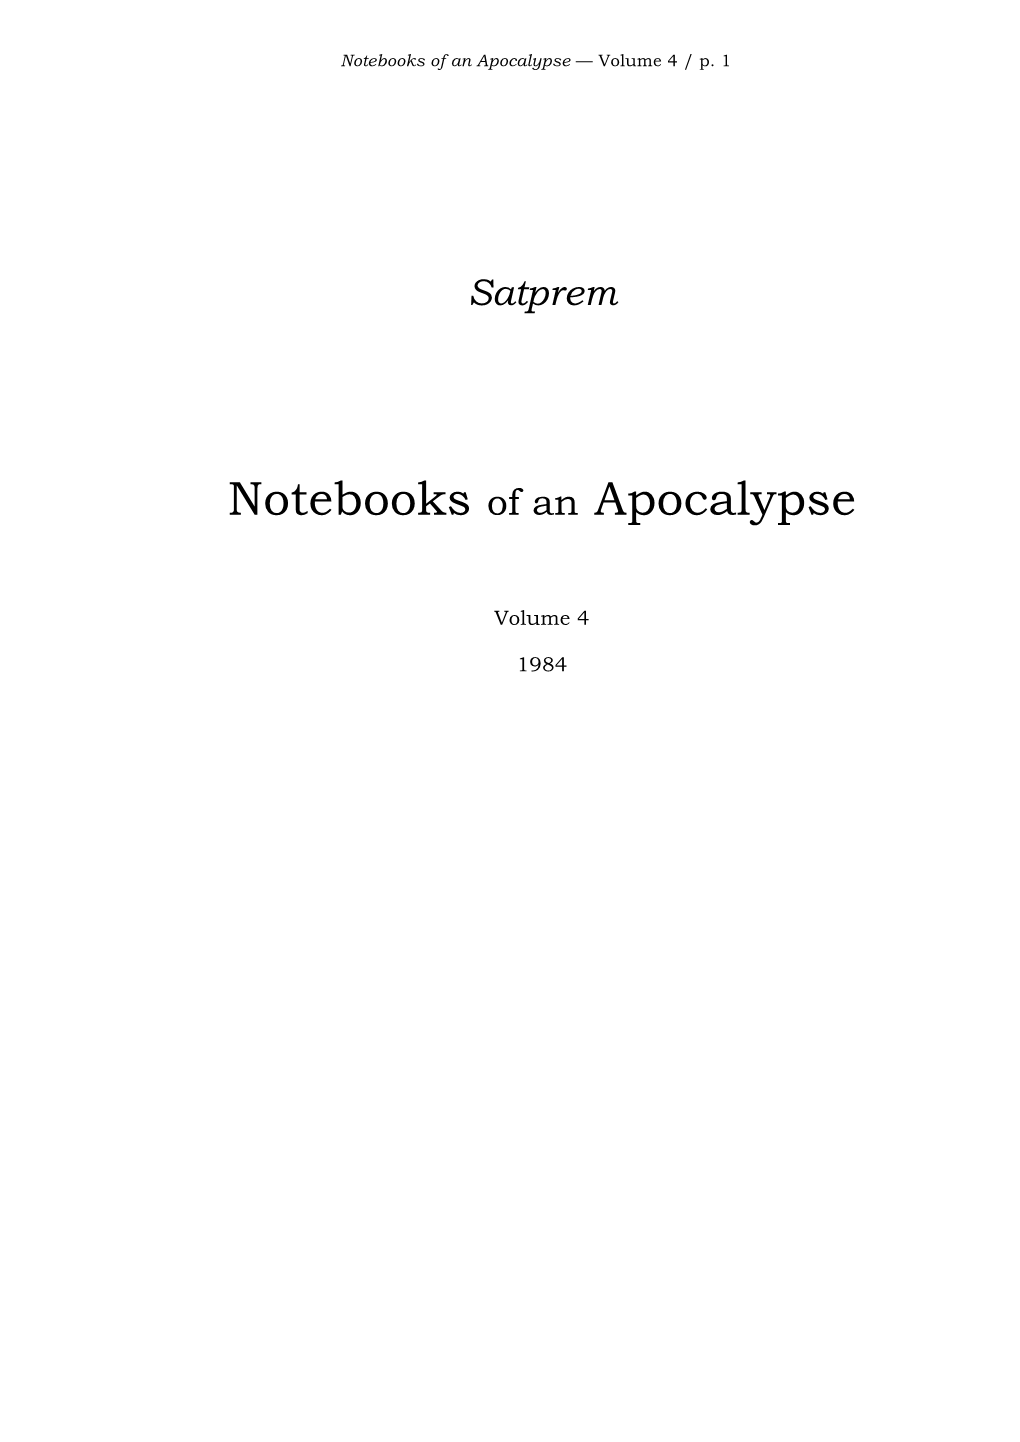 Satprem. Notebooks of an Apocalypse